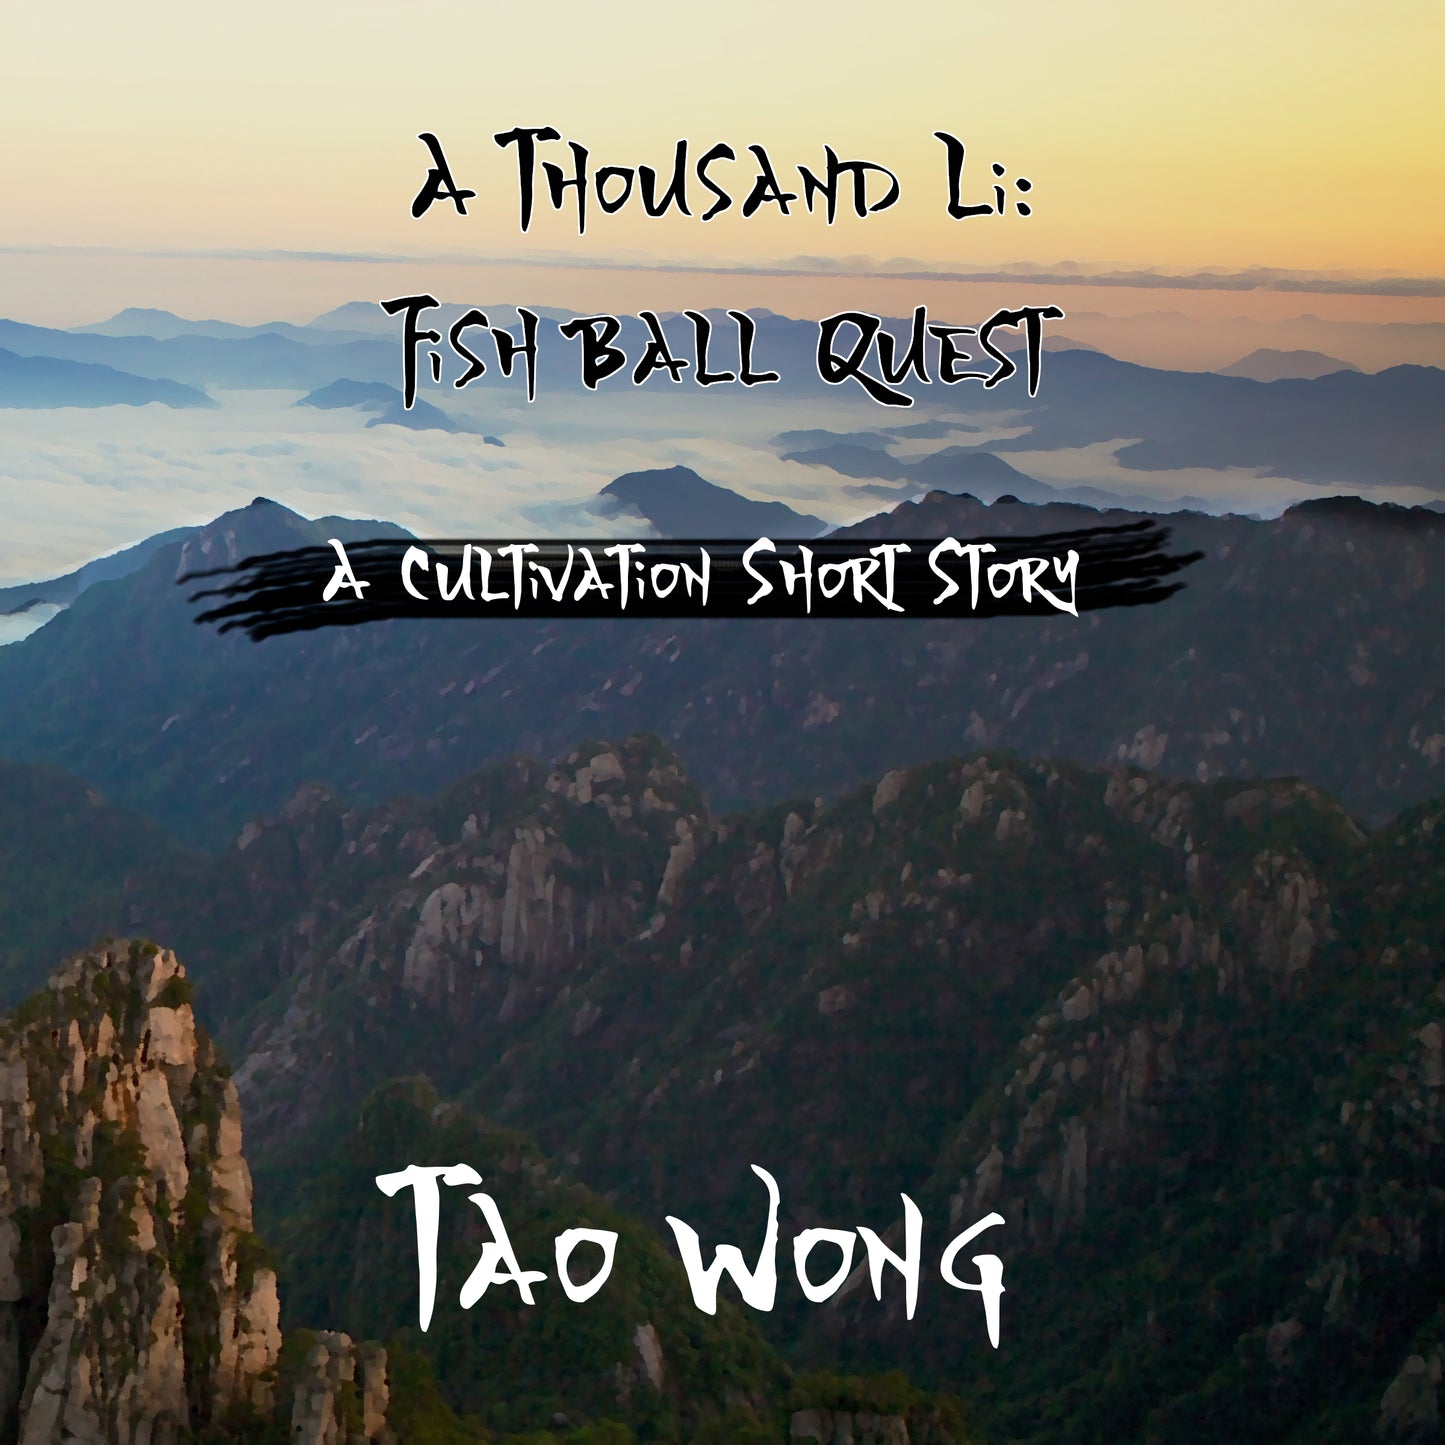 Fish Ball Quest (A Thousand Li Short Story)